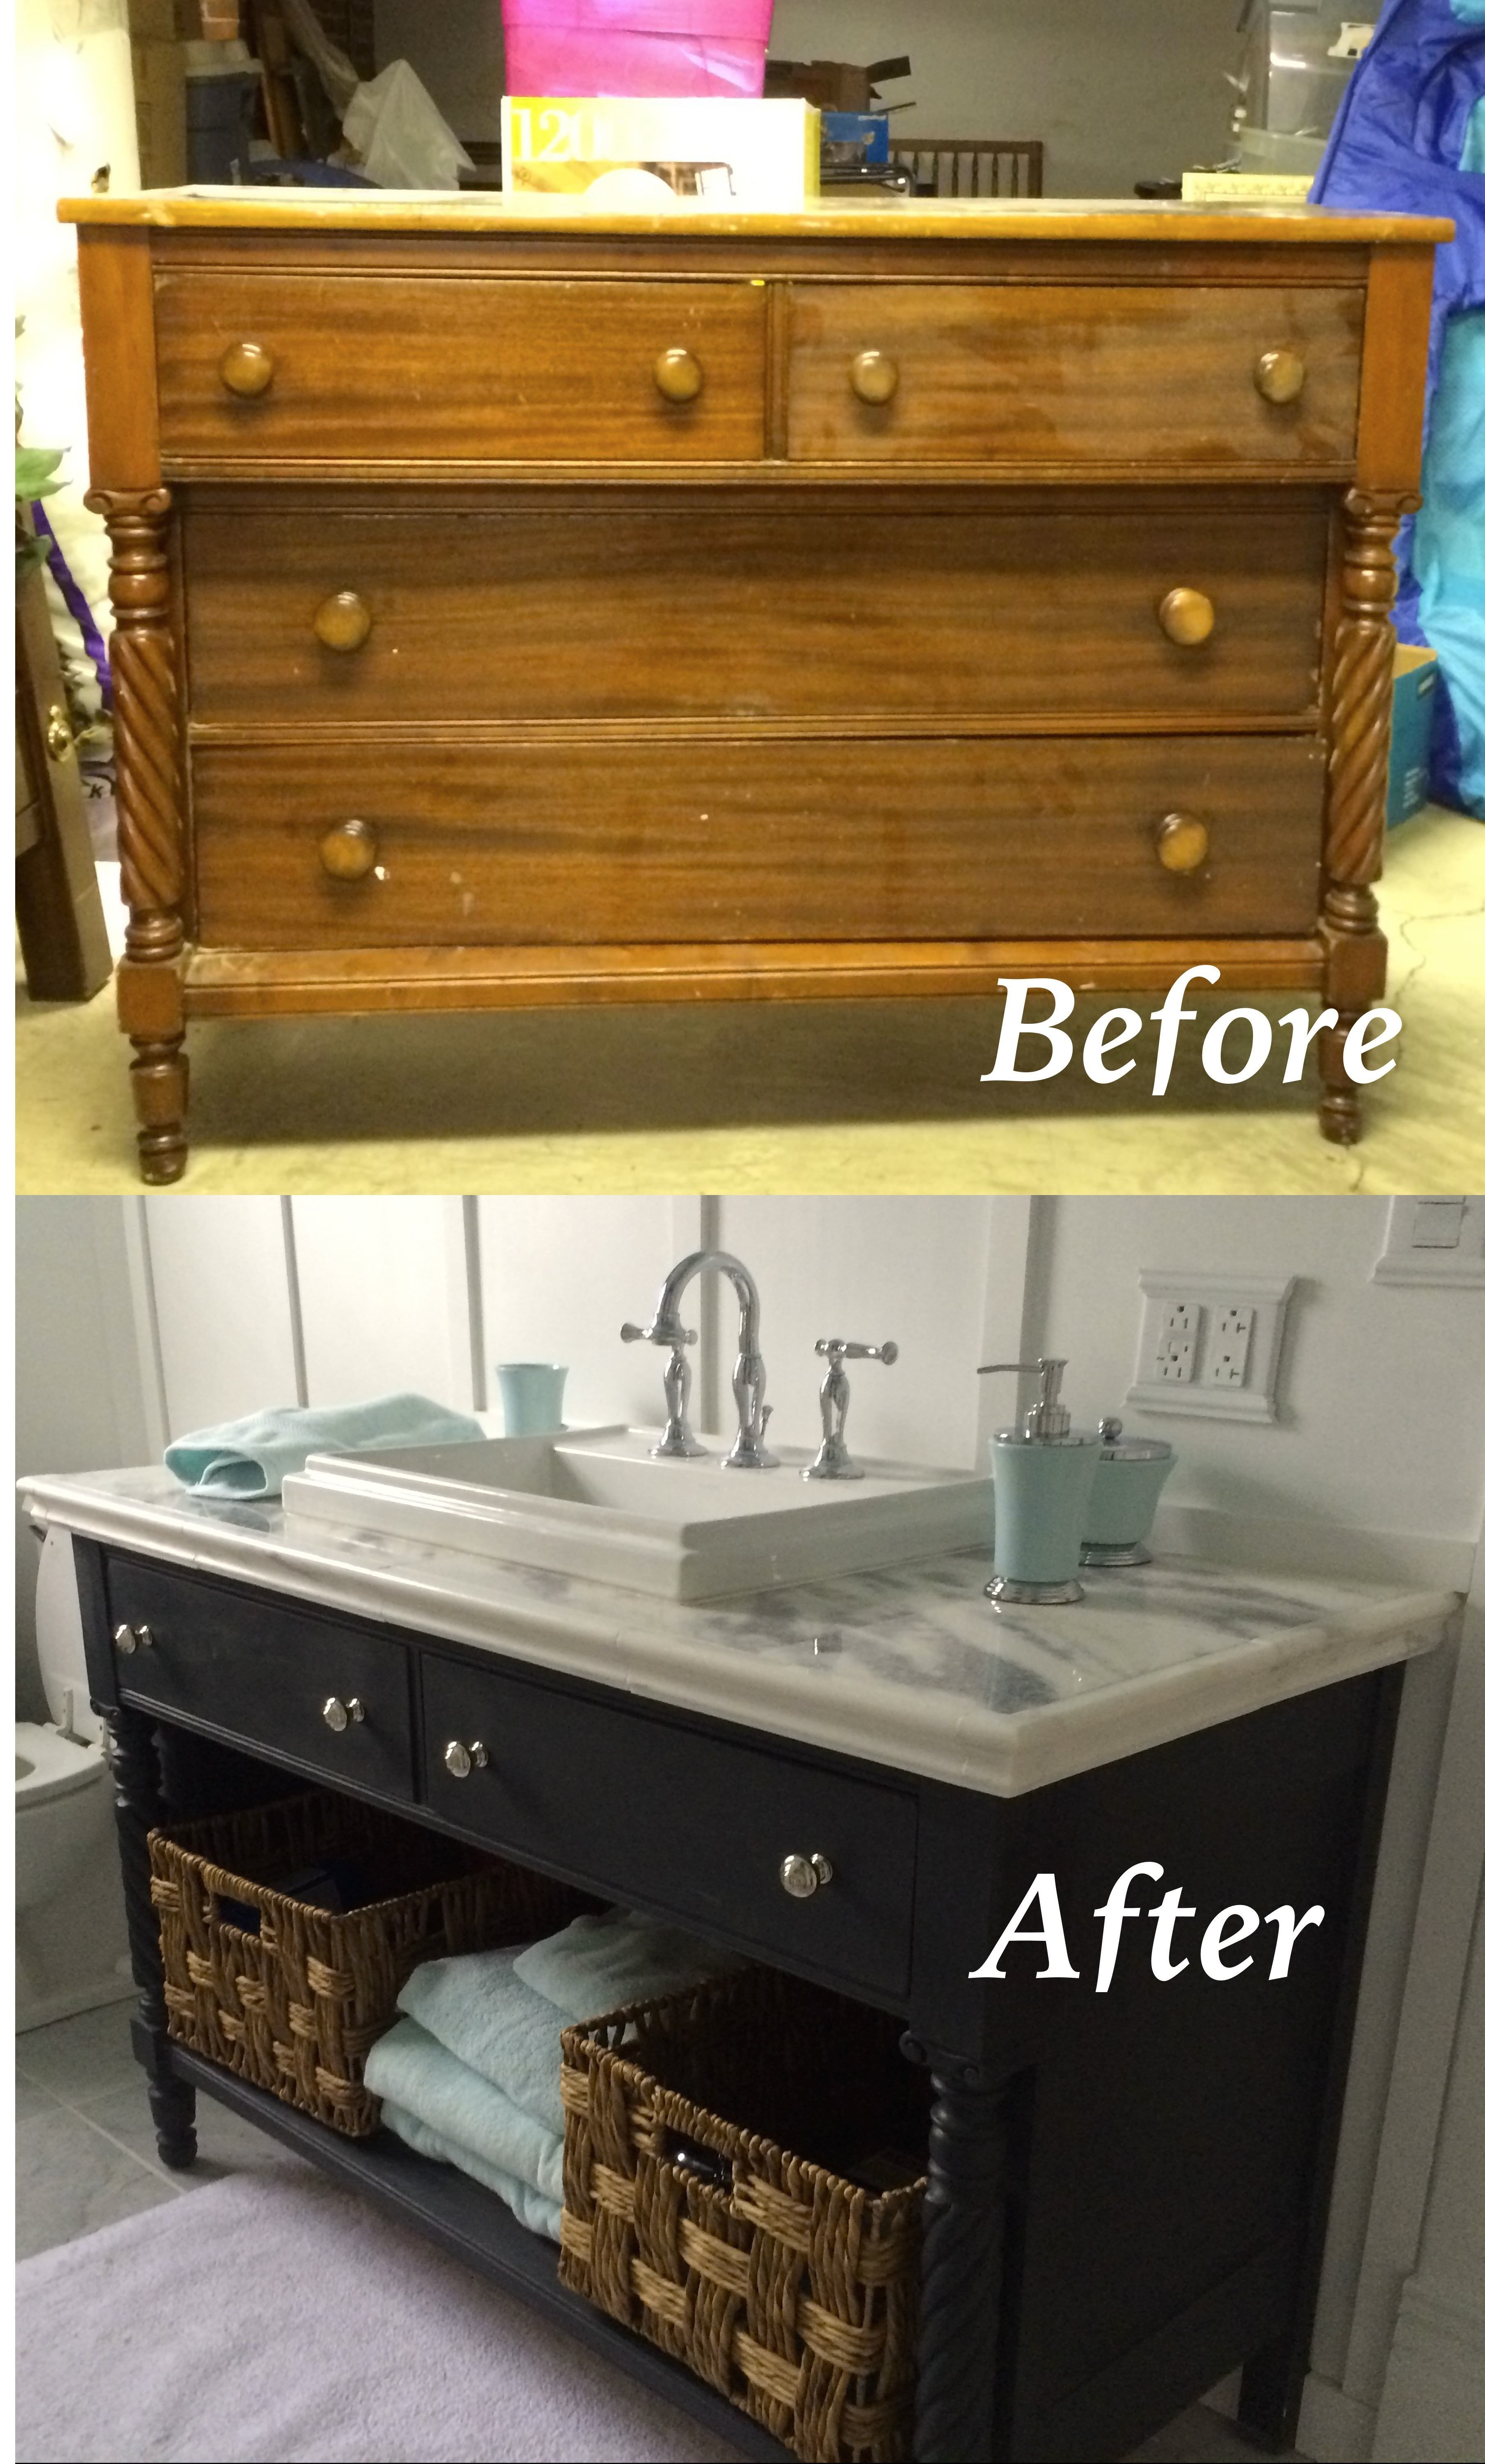 Antique Furniture Turned Into Bathroom Vanity Faucet Ideas Site